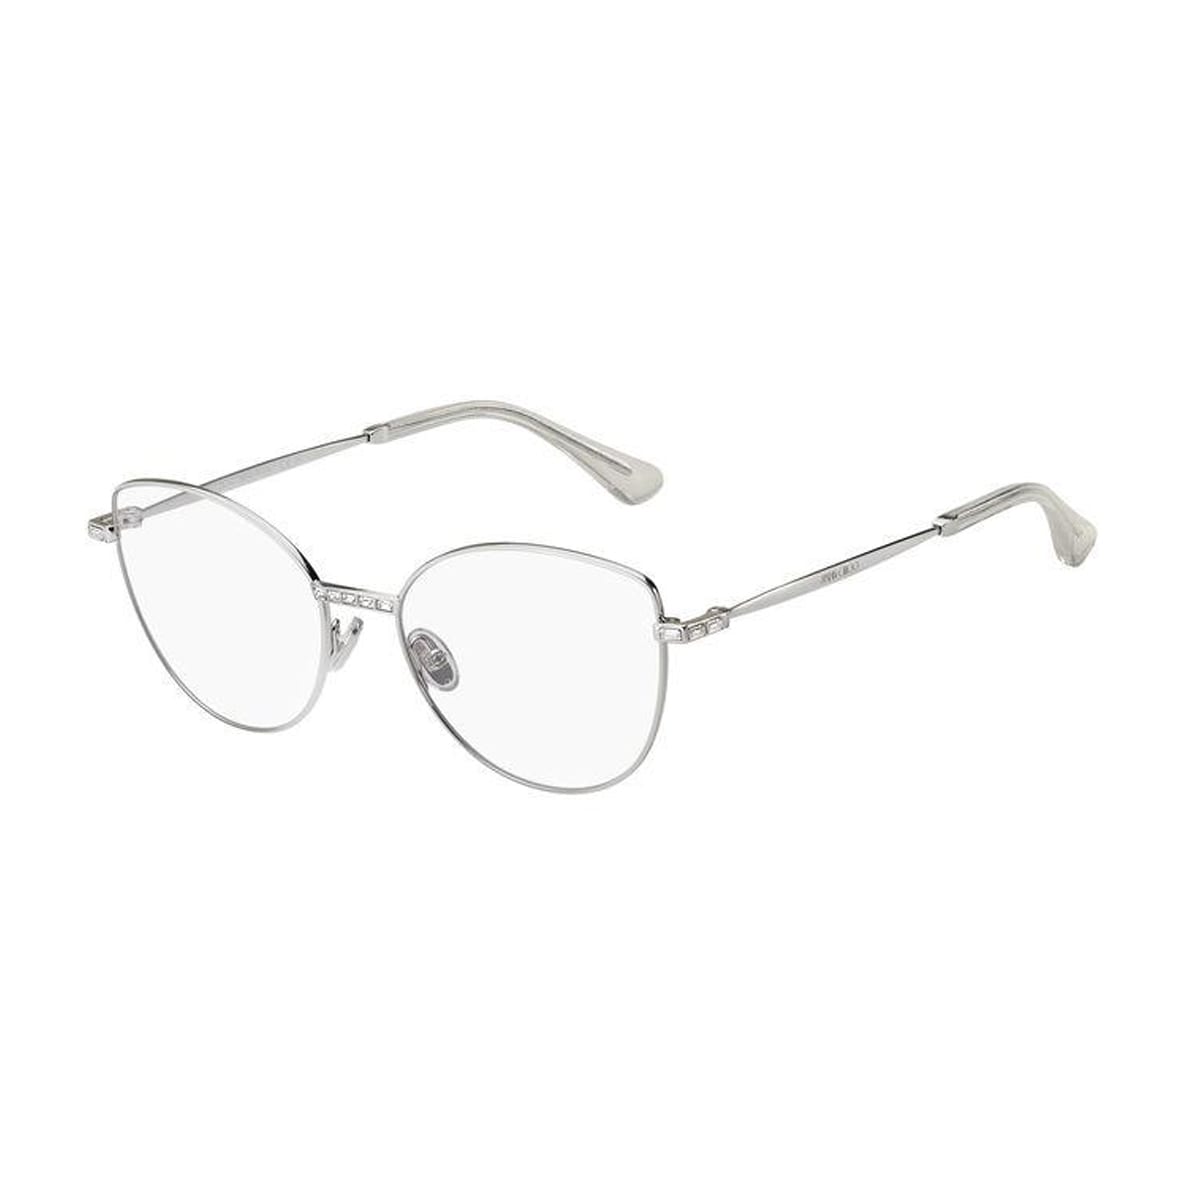 Jimmy Choo Eyewear Jc285 010/17 Glasses